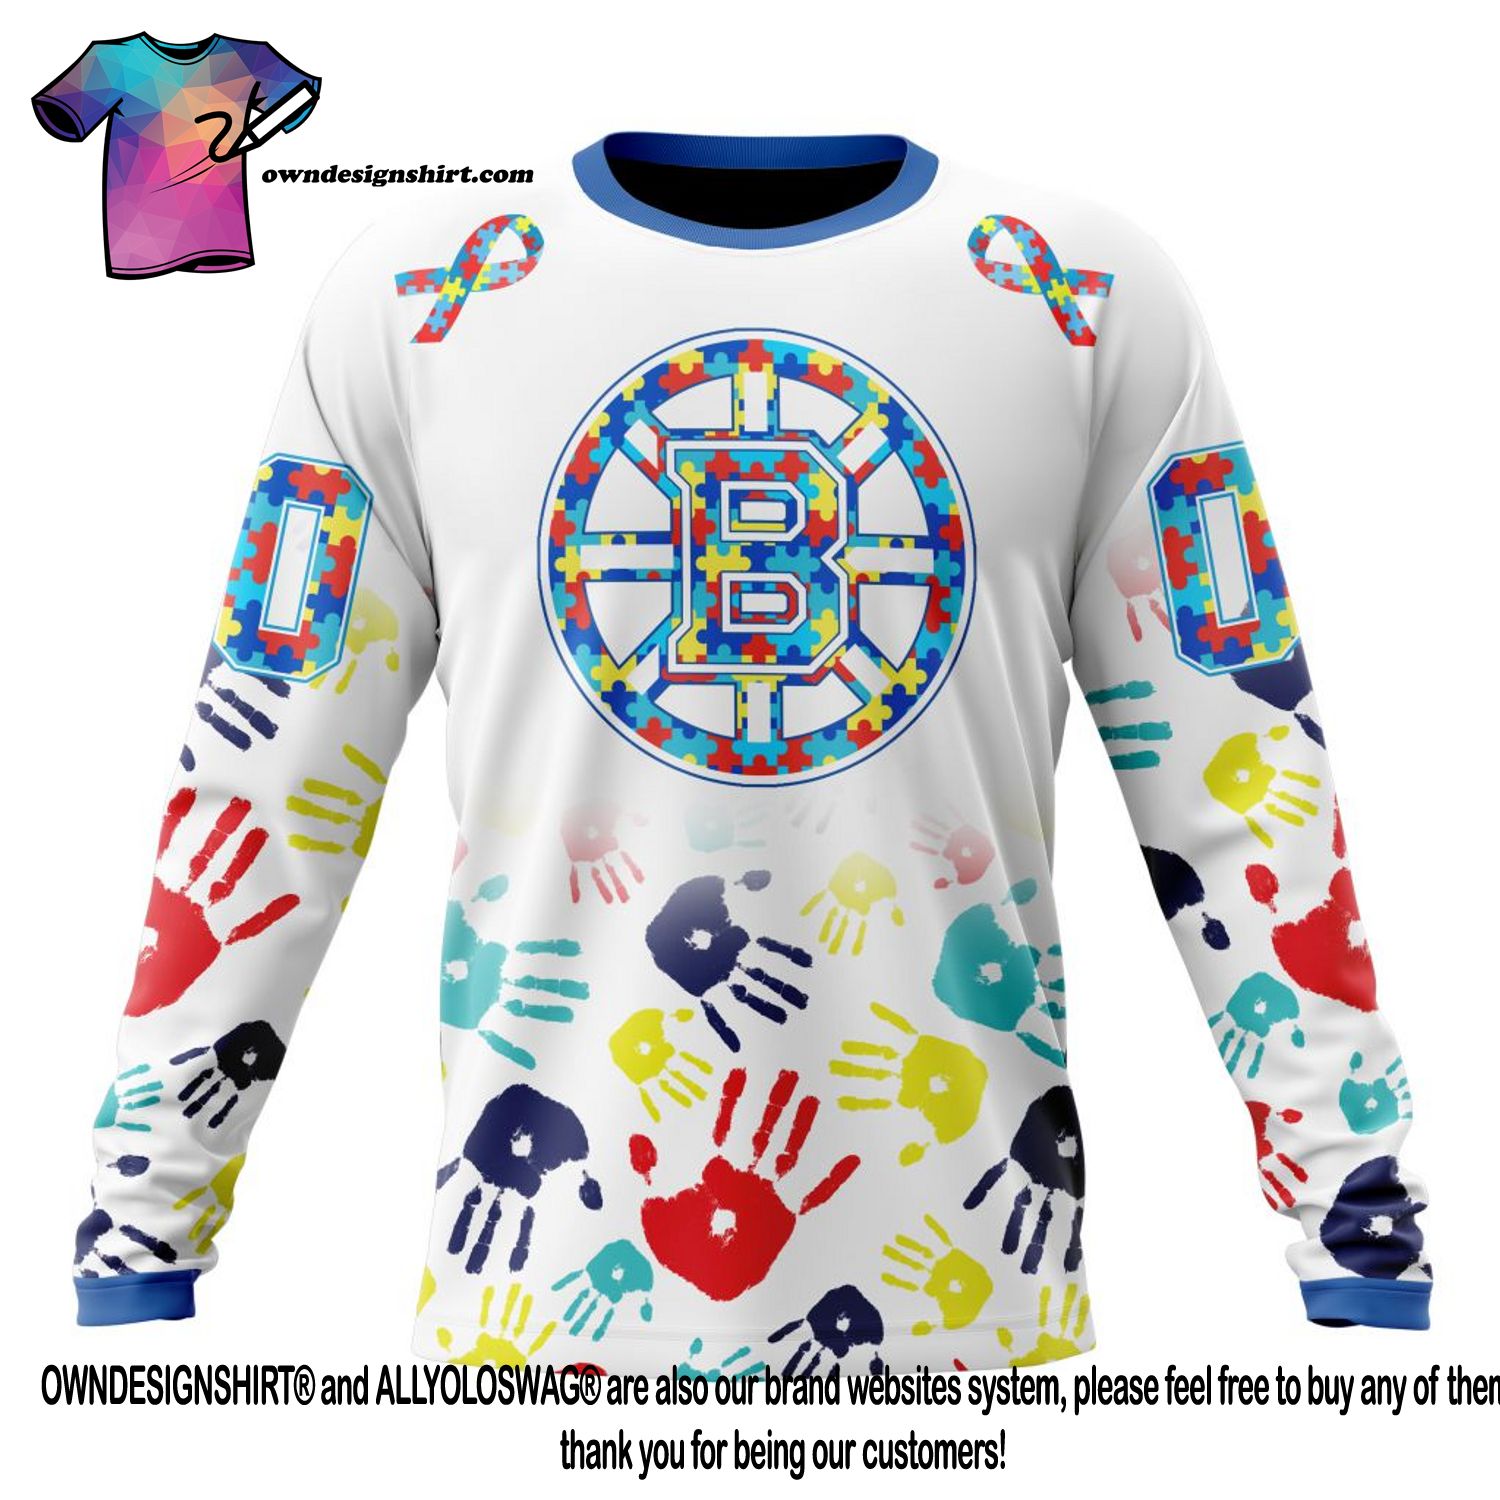 NHL Boston Bruins Grateful Dead Design 3D Printed T-Shirt - The